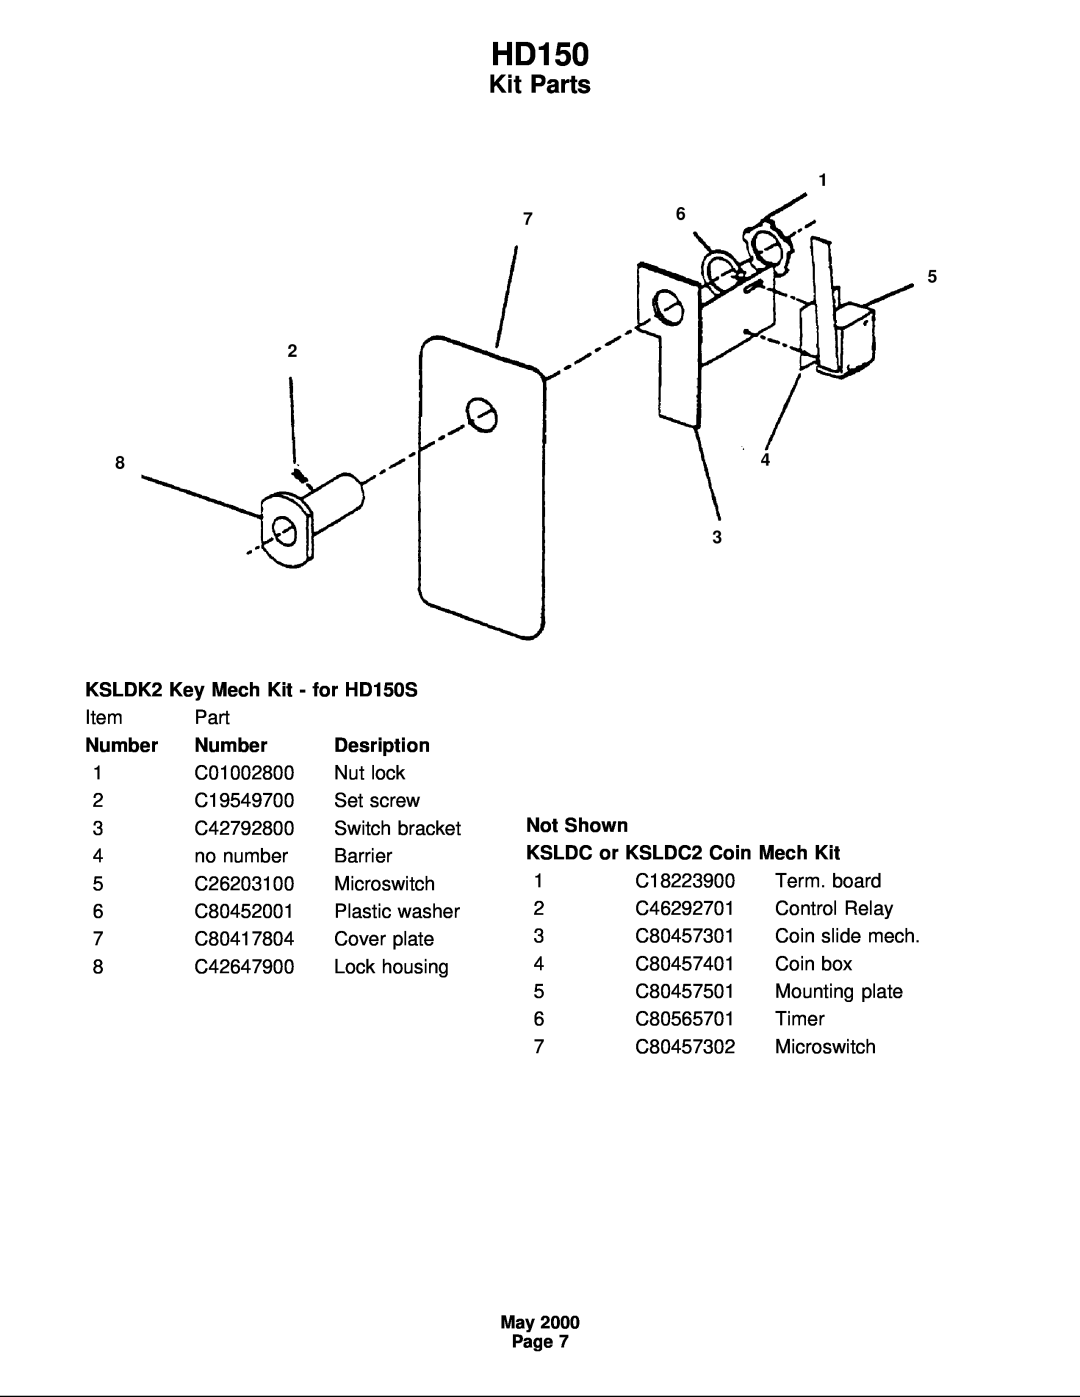 Scotsman Ice manual Kit Parts, KSLDK2 Key Mech Kit - for HD150S, Number, Desription, Not Shown 